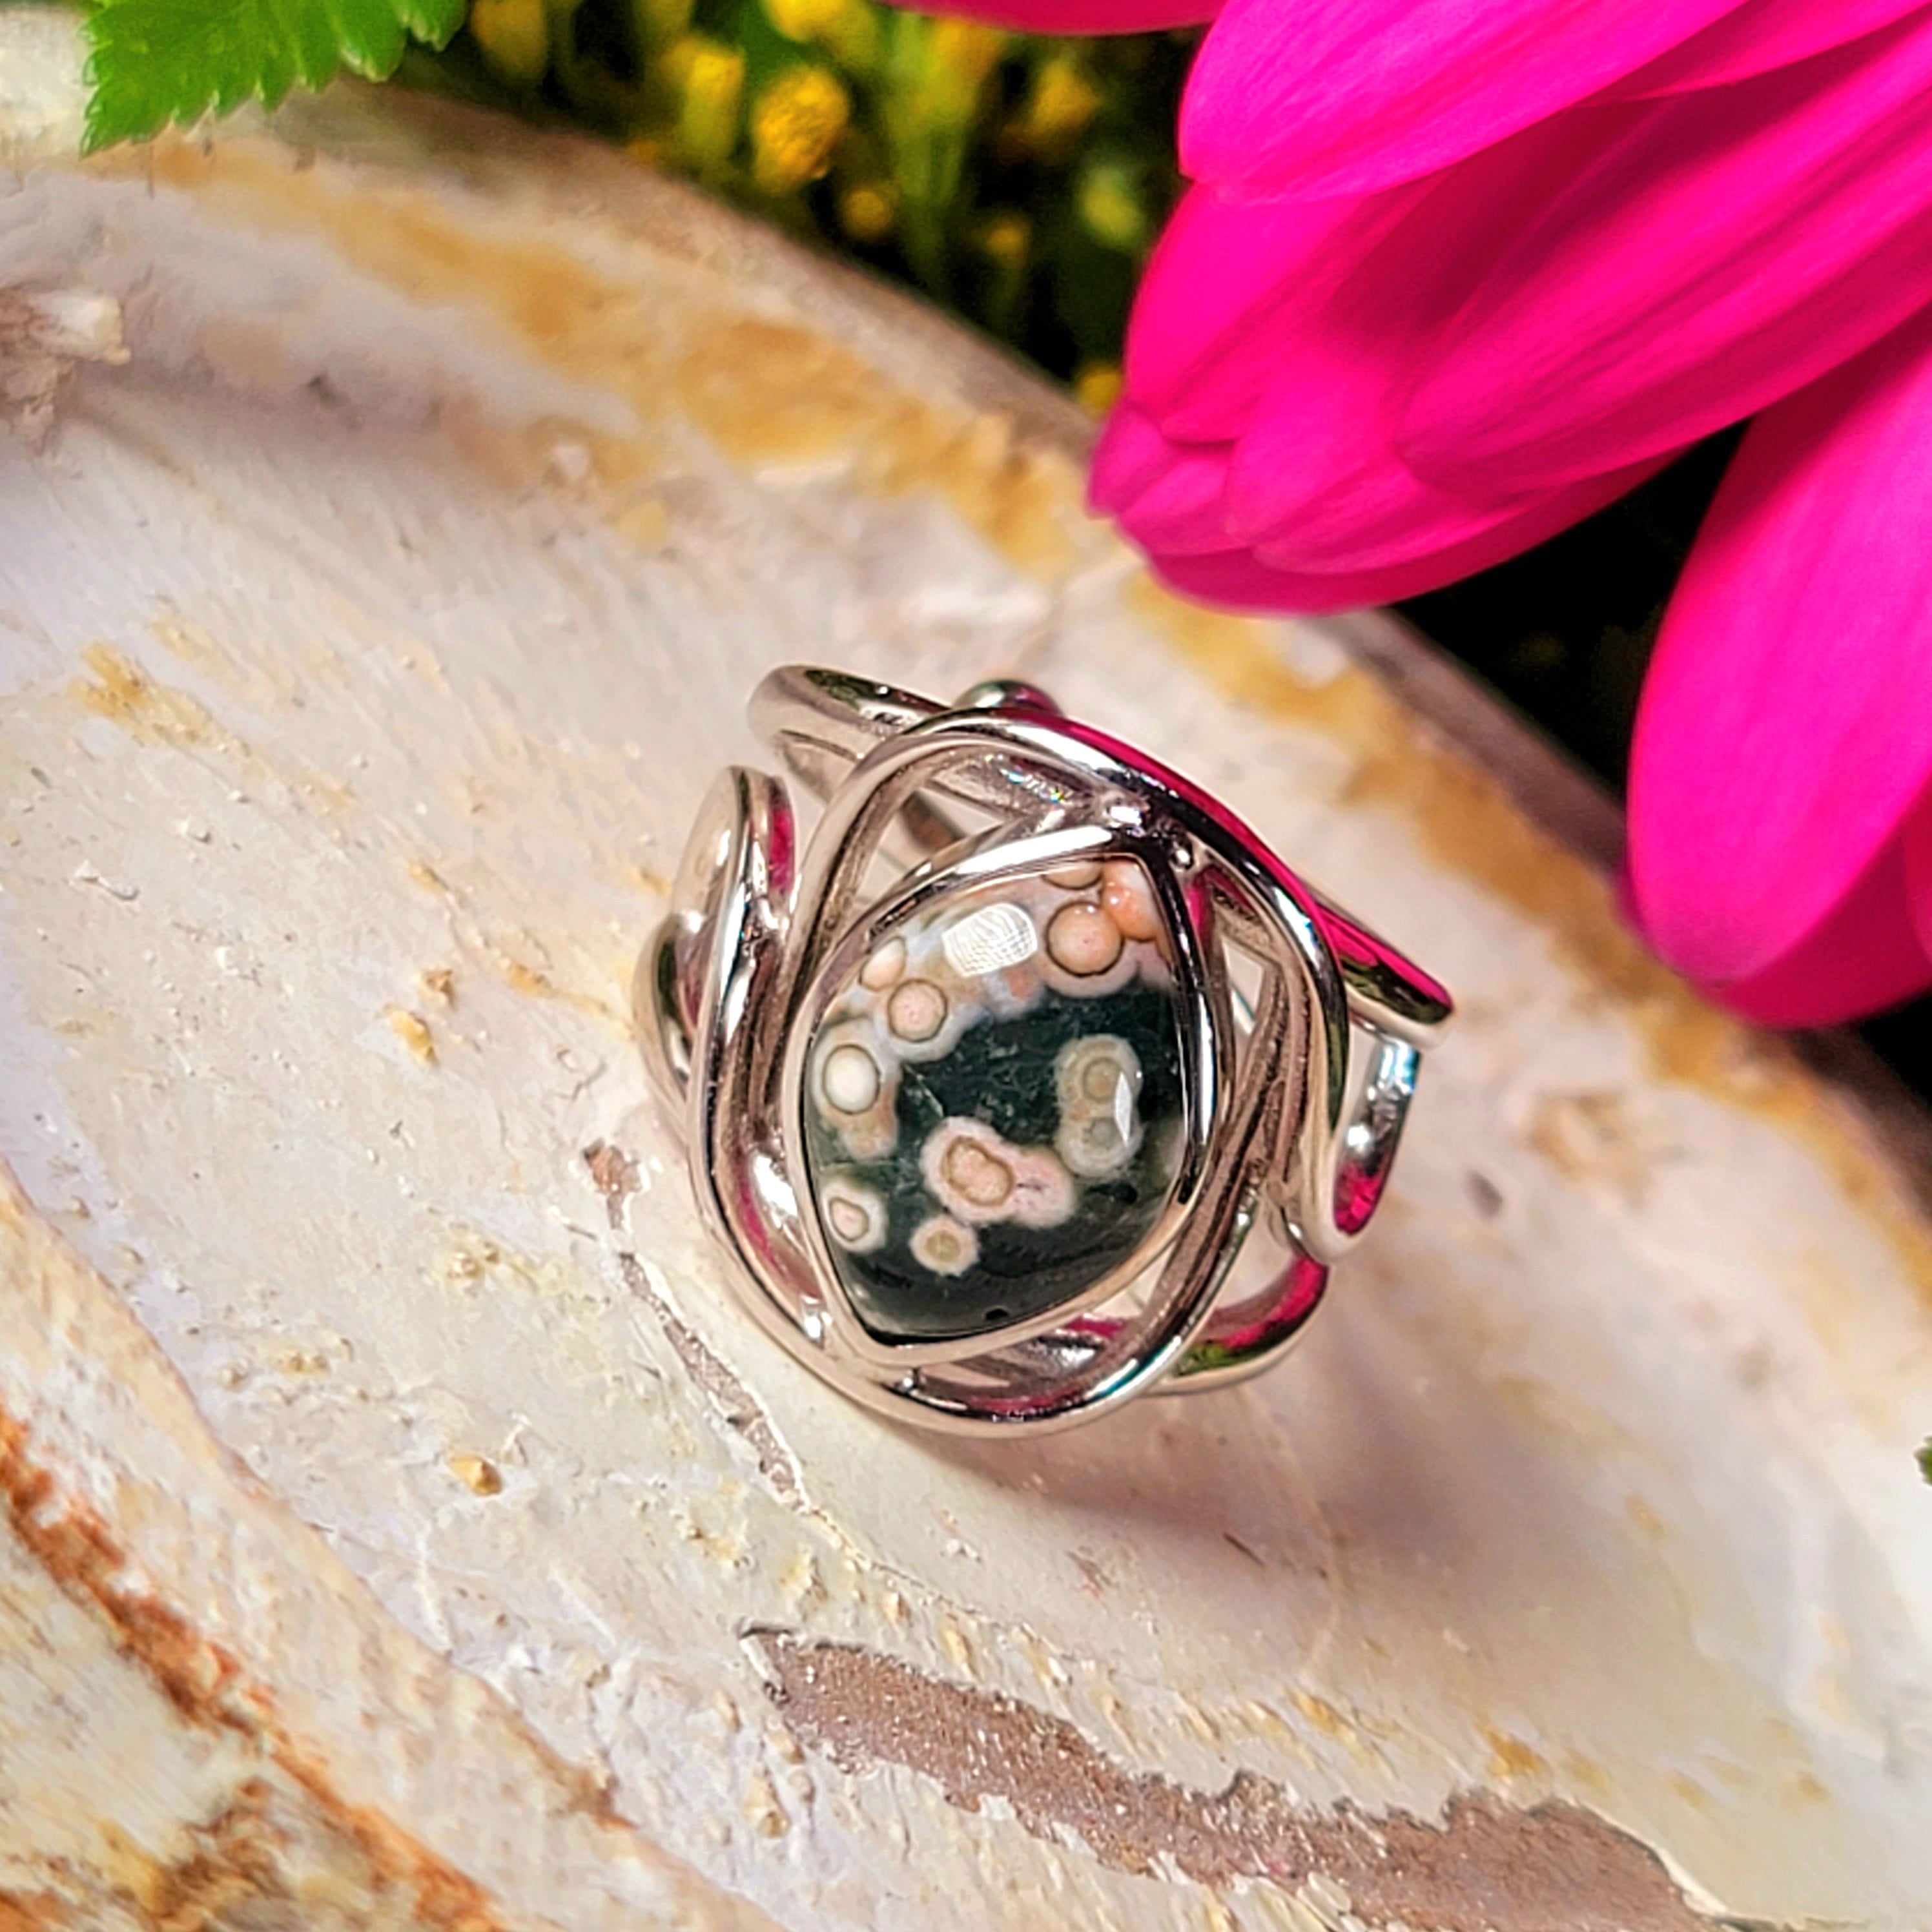 Orbicular "Ocean" Jasper Finger Cuff Adjustable Ring .925 Silver for Joy and Peace